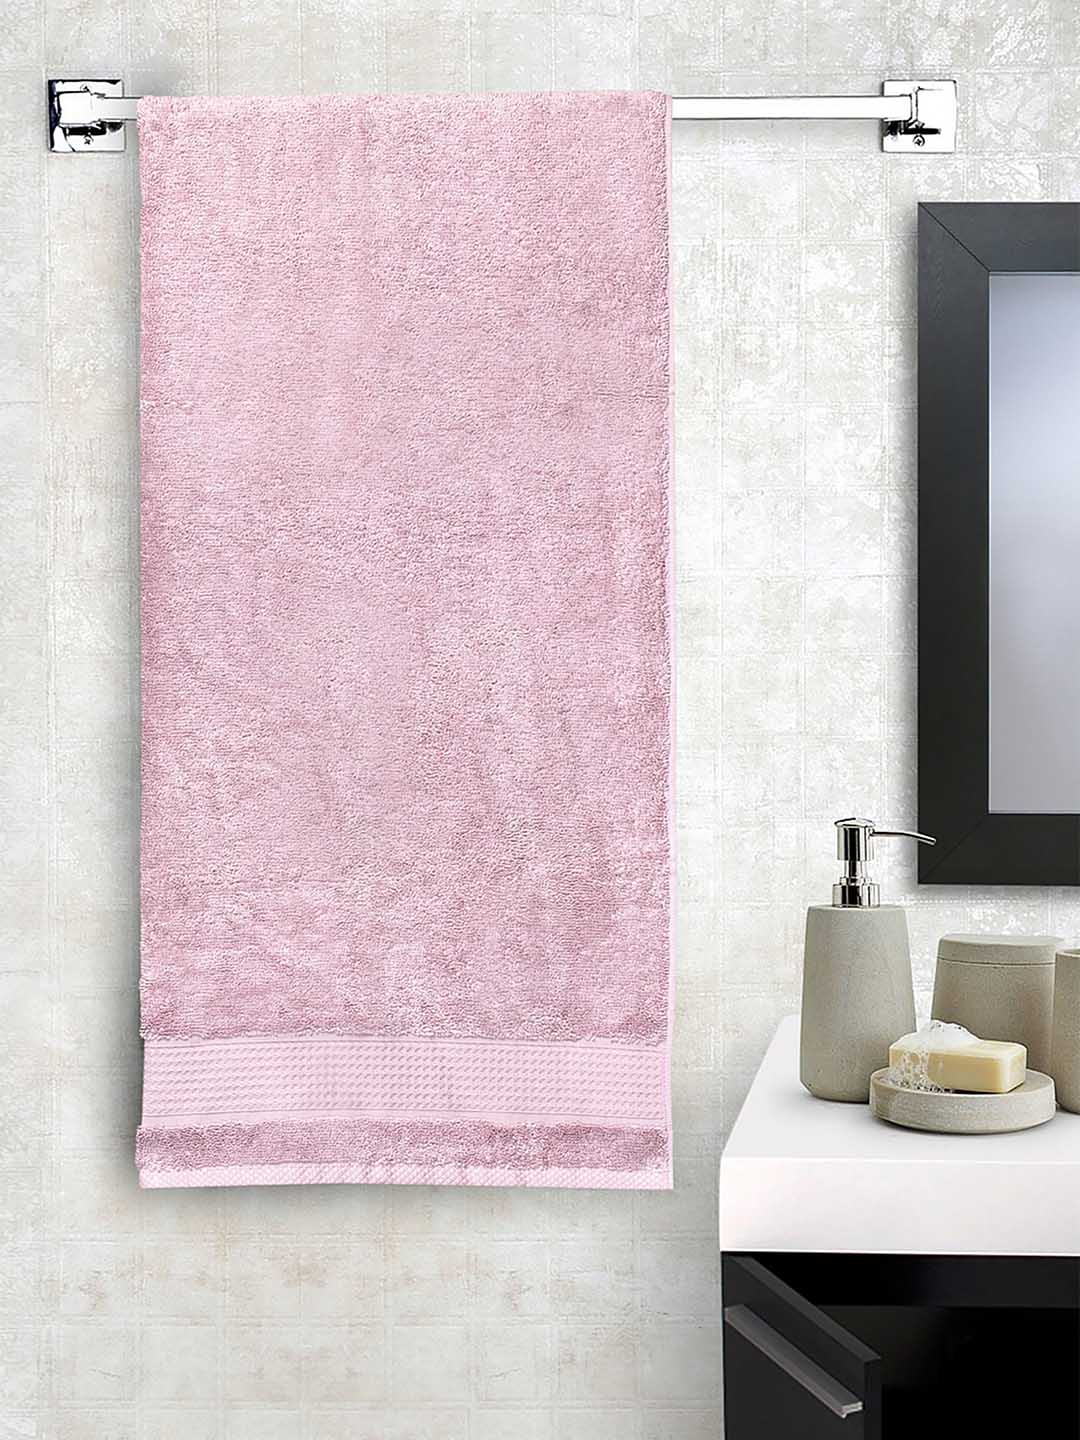 Spaces Organic Sugarplum Bath Towel (Purple)